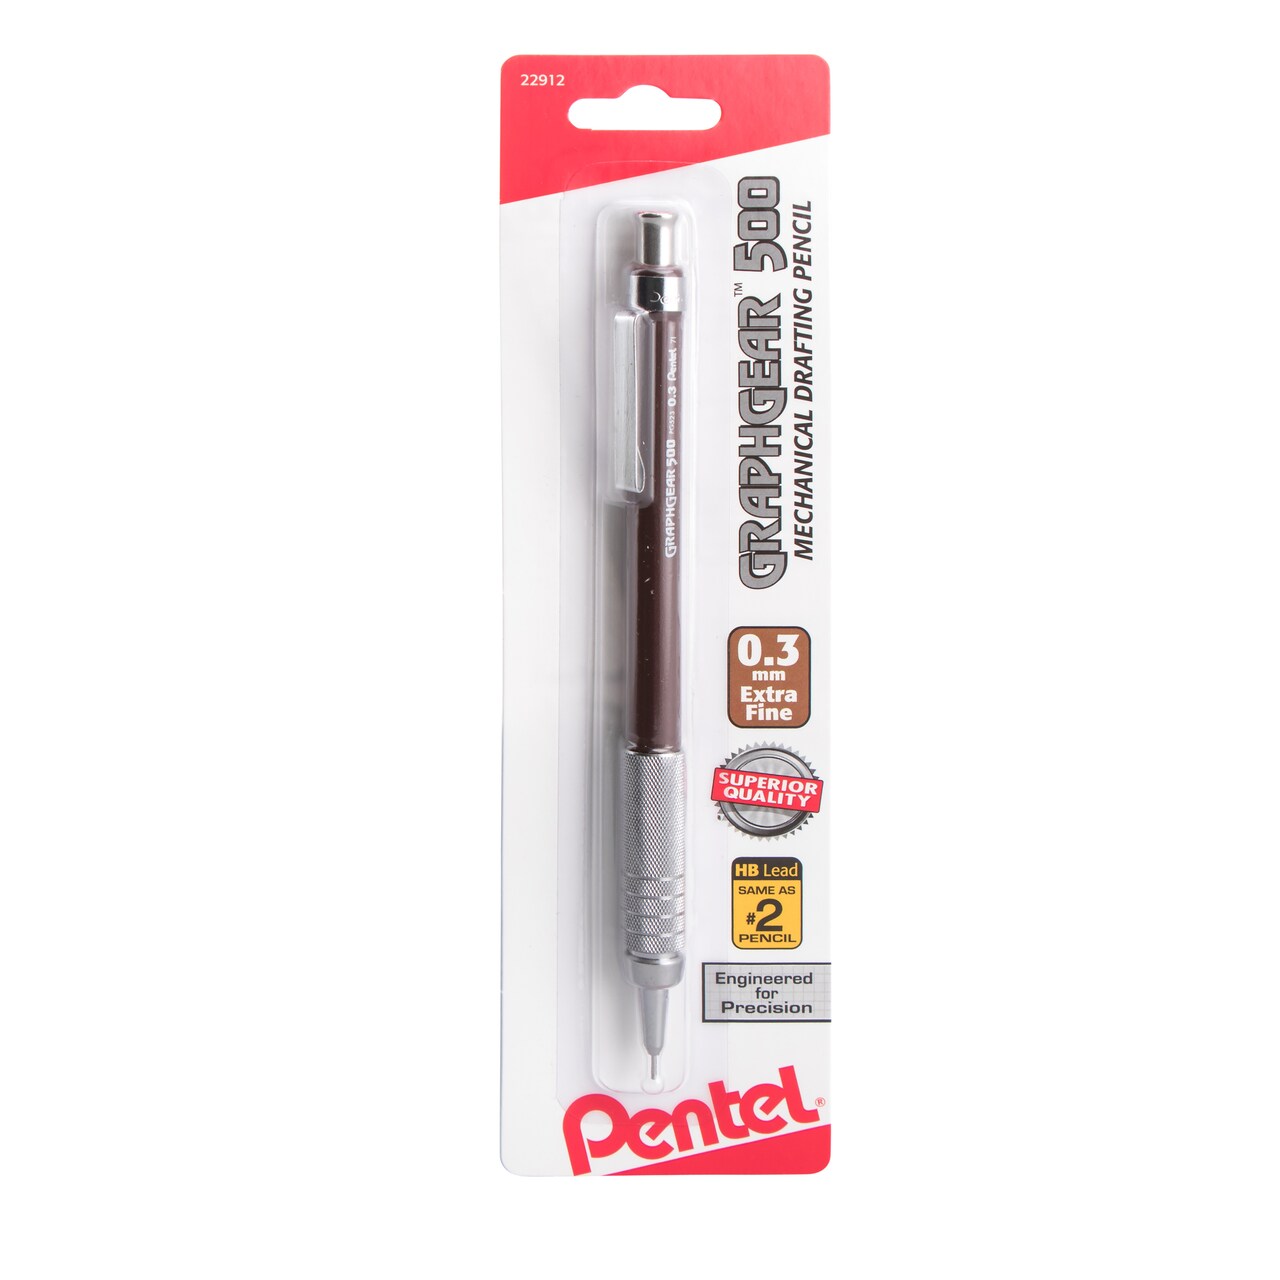 Pentel GraphGear 500 Drafting Pencil .3mm, Brown, Carded Packaging